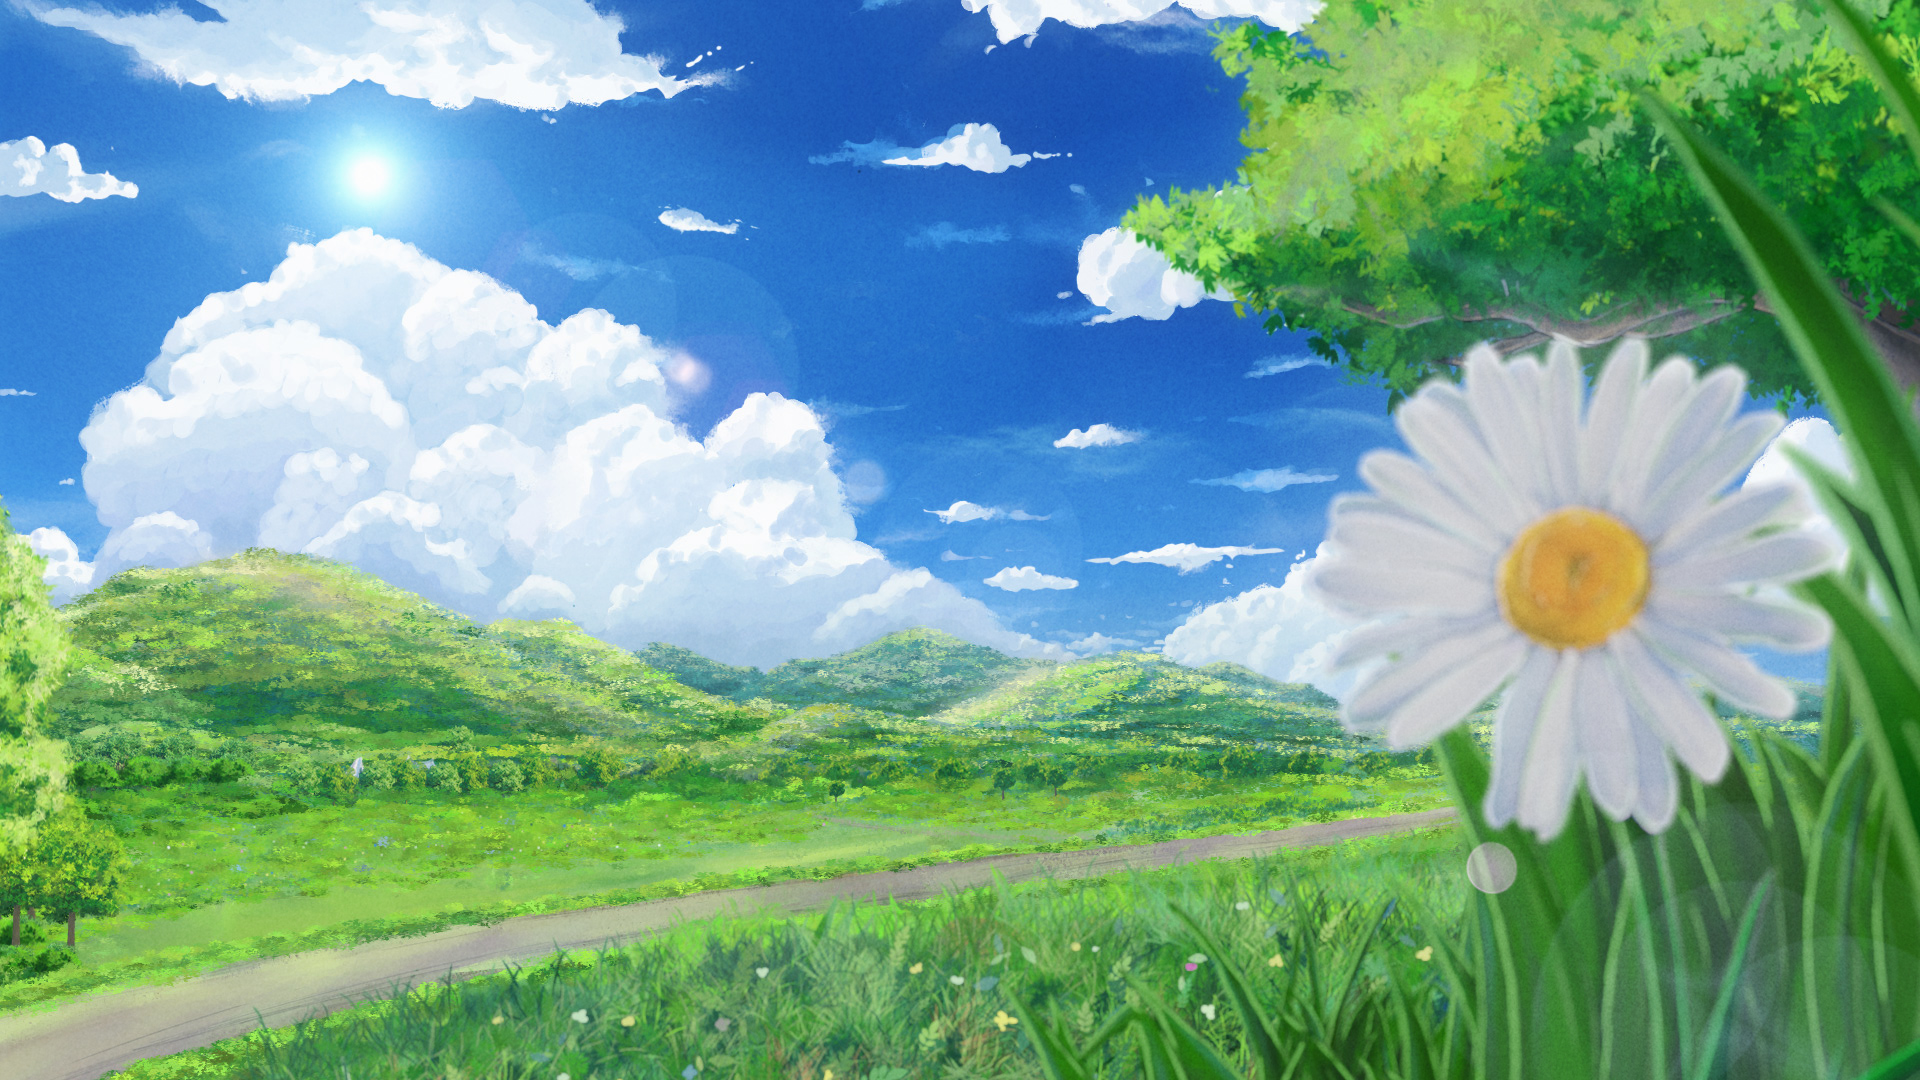 Anime 1920x1080 digital art illustration artwork field nature landscape grass clouds sky animation outdoors flowers plants sunlight depth of field